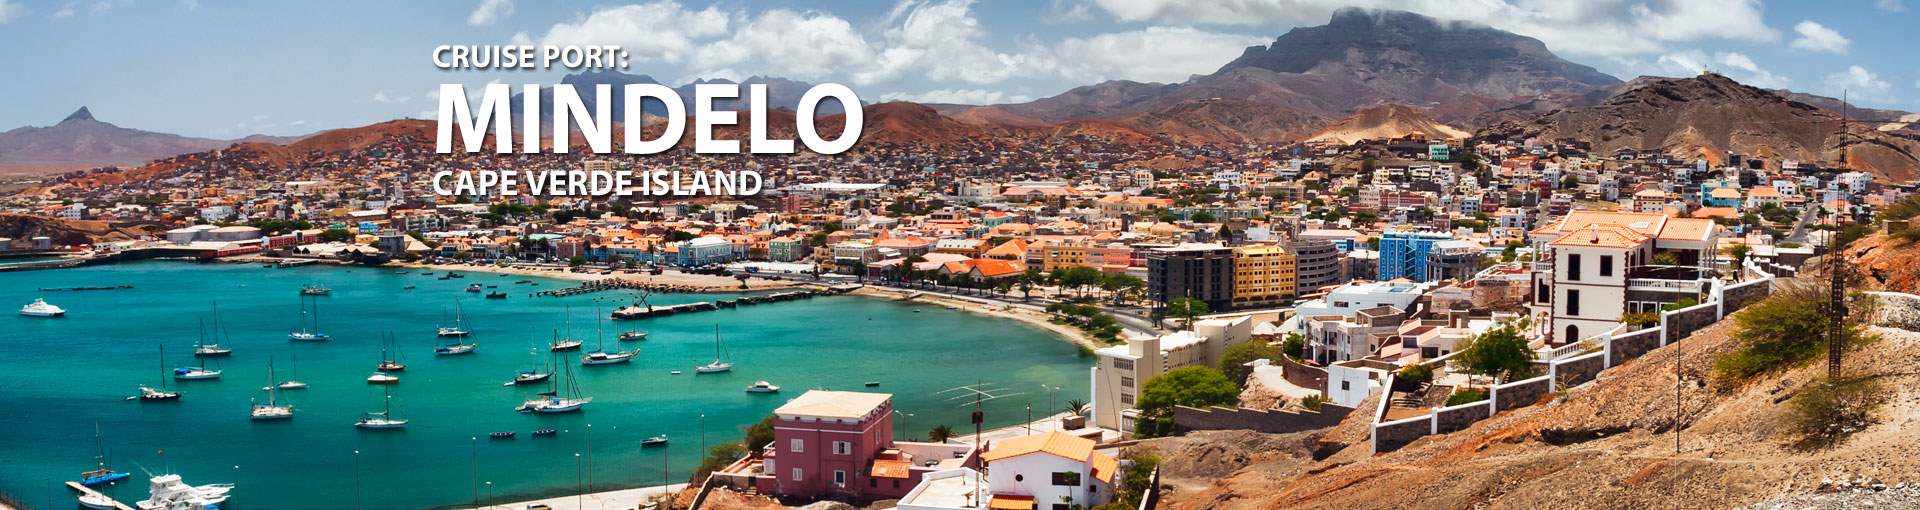 Mindelo, Cape Verde Island Cruise Port, 2019 and 2020 Cruises to